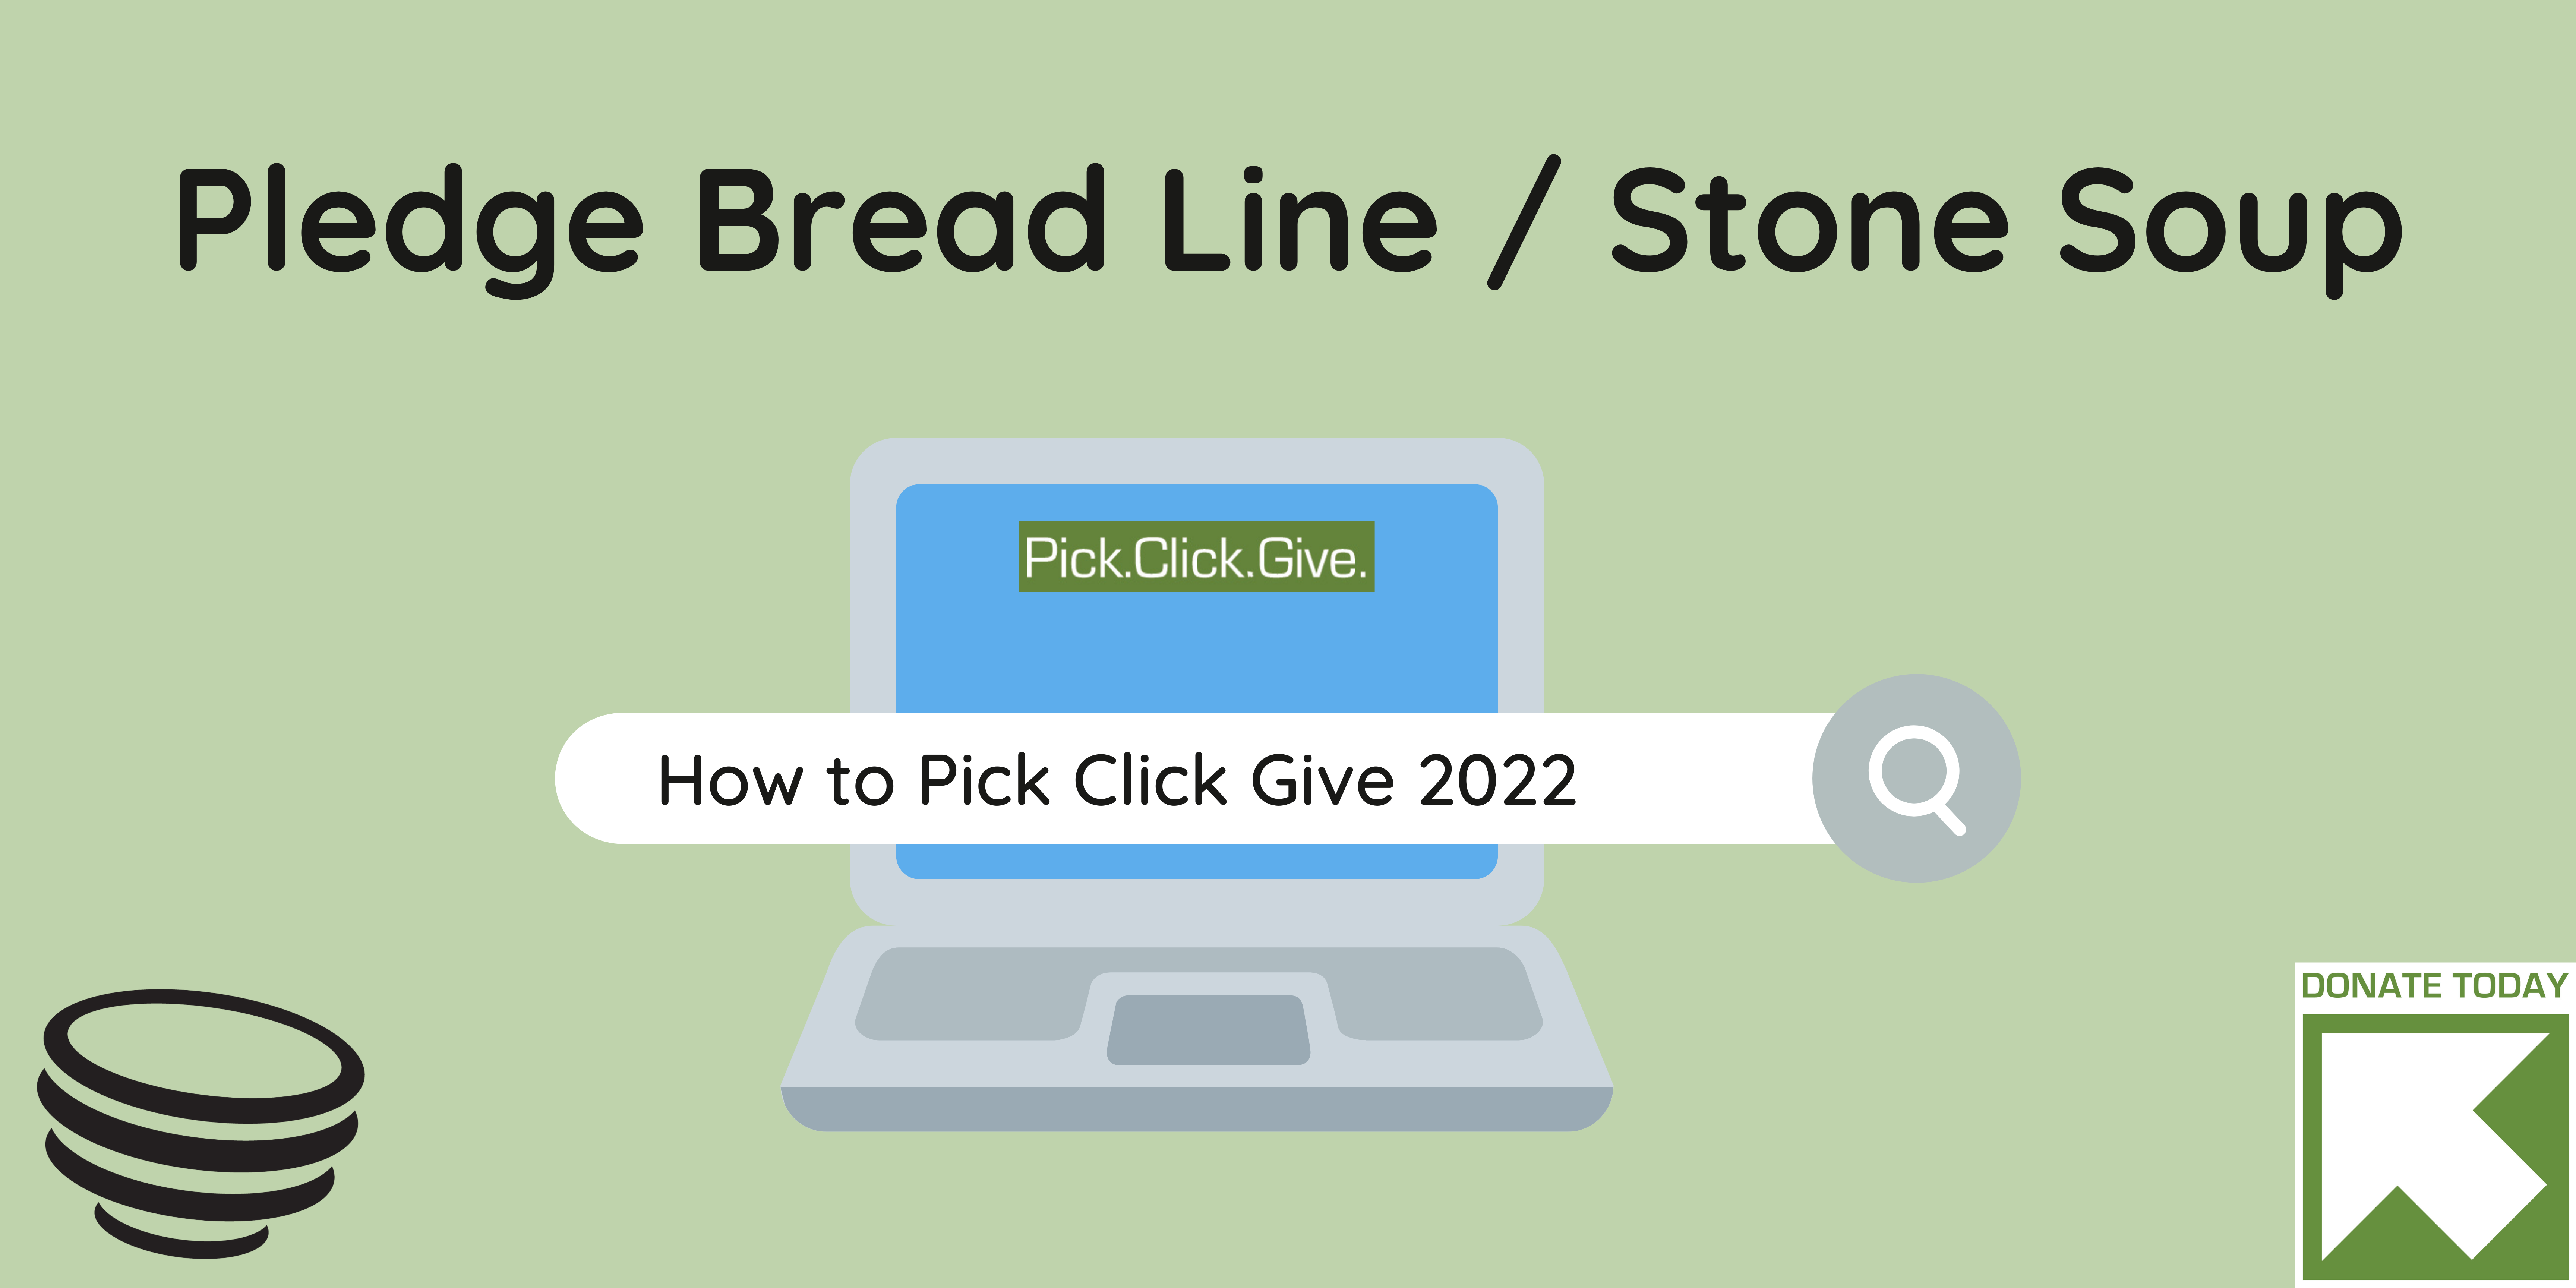 Pick.Click.Give. 2022